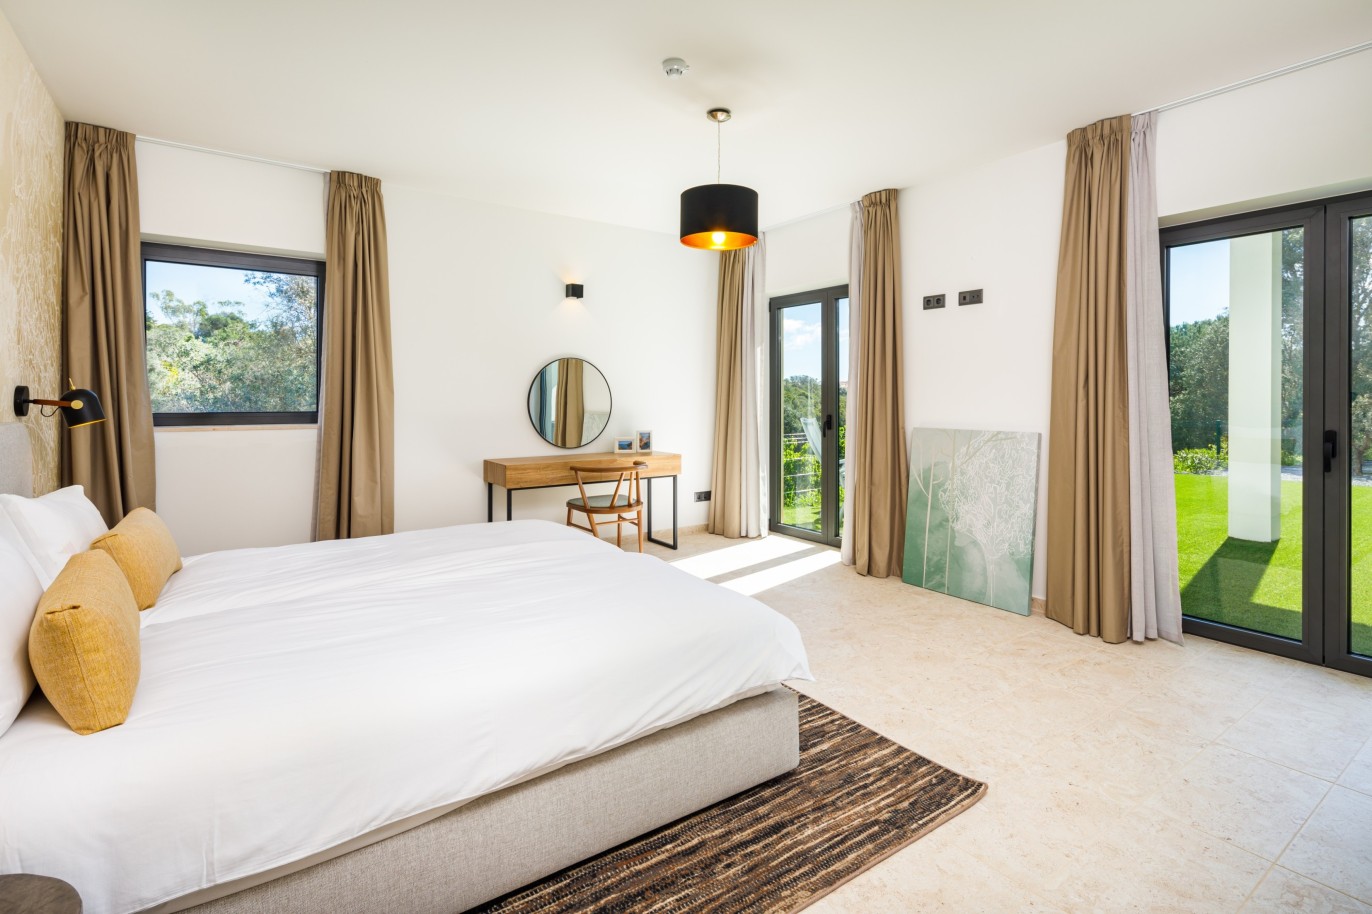 5 Bedroom Villa in luxury condominium with private pool, Carvoeiro, Algarve_259458